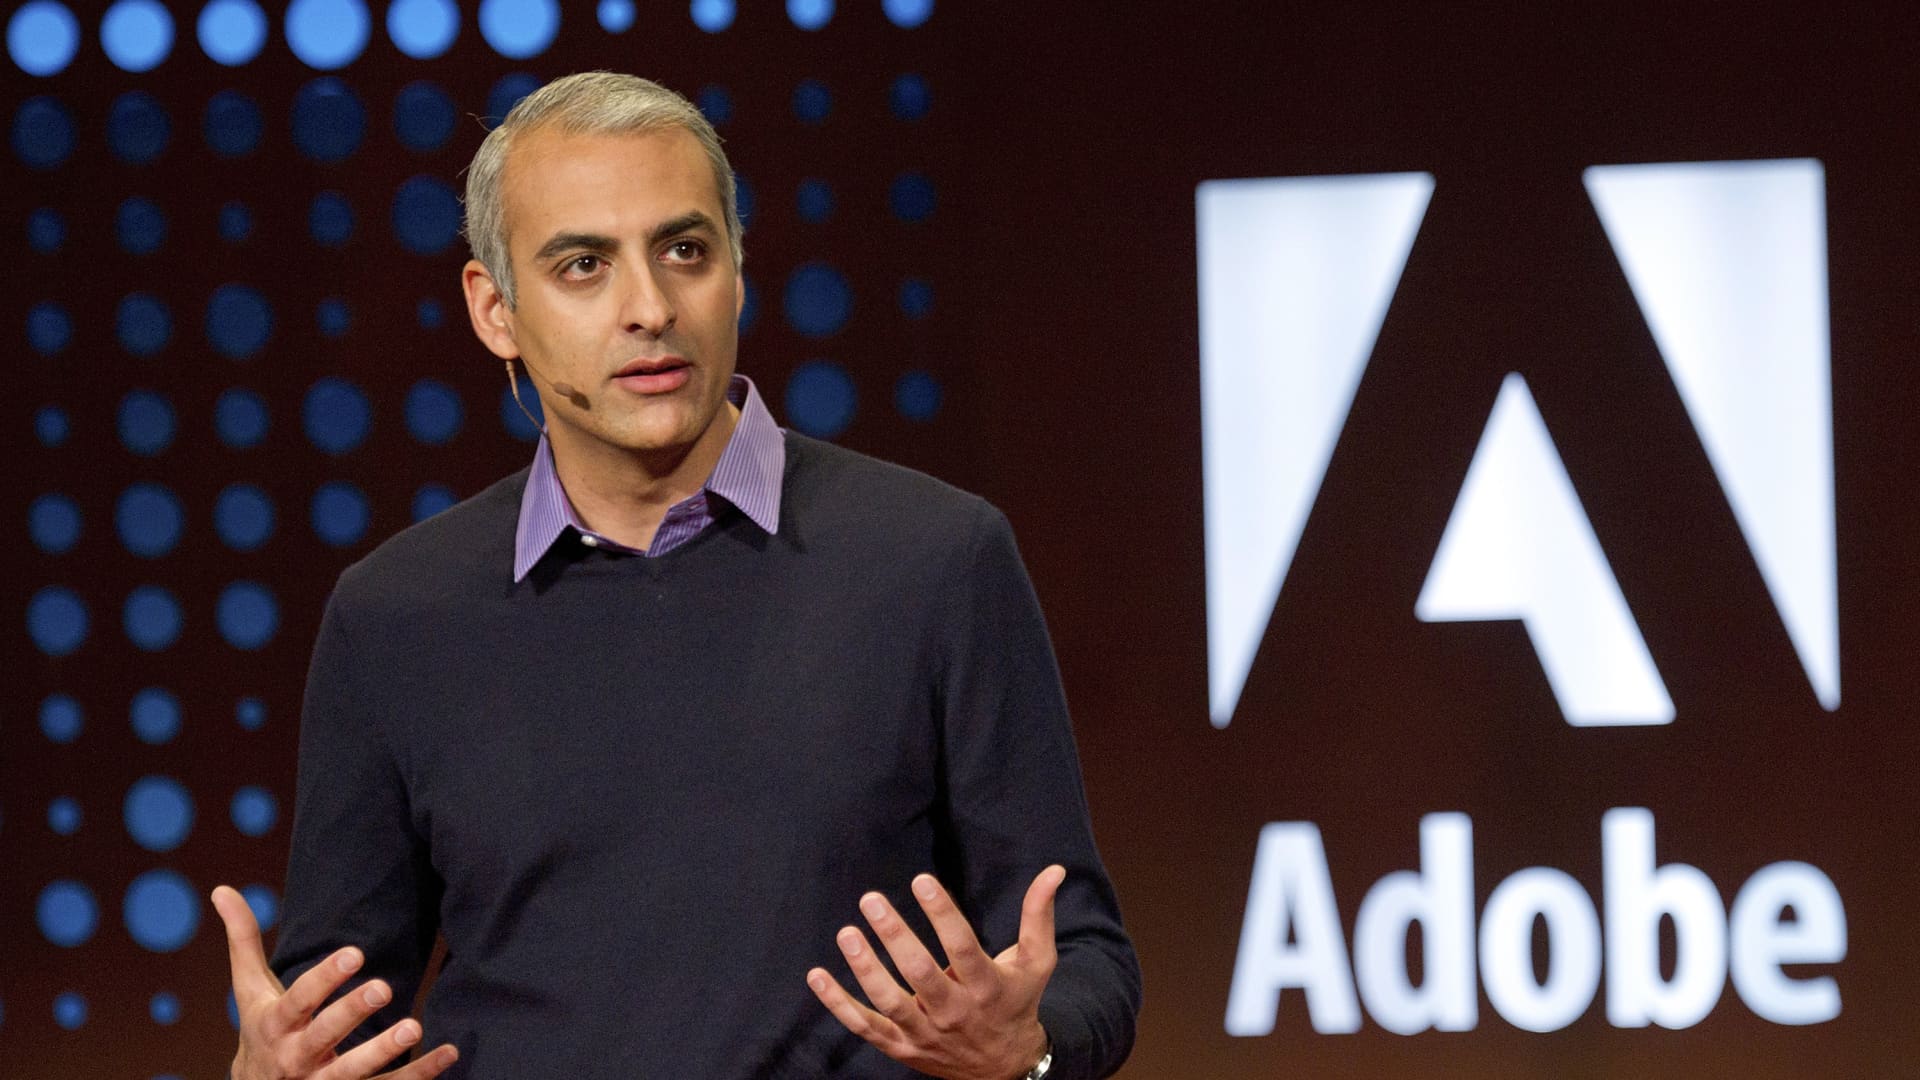 Adobe and Figma call off  billion acquisition after regulatory scrutiny